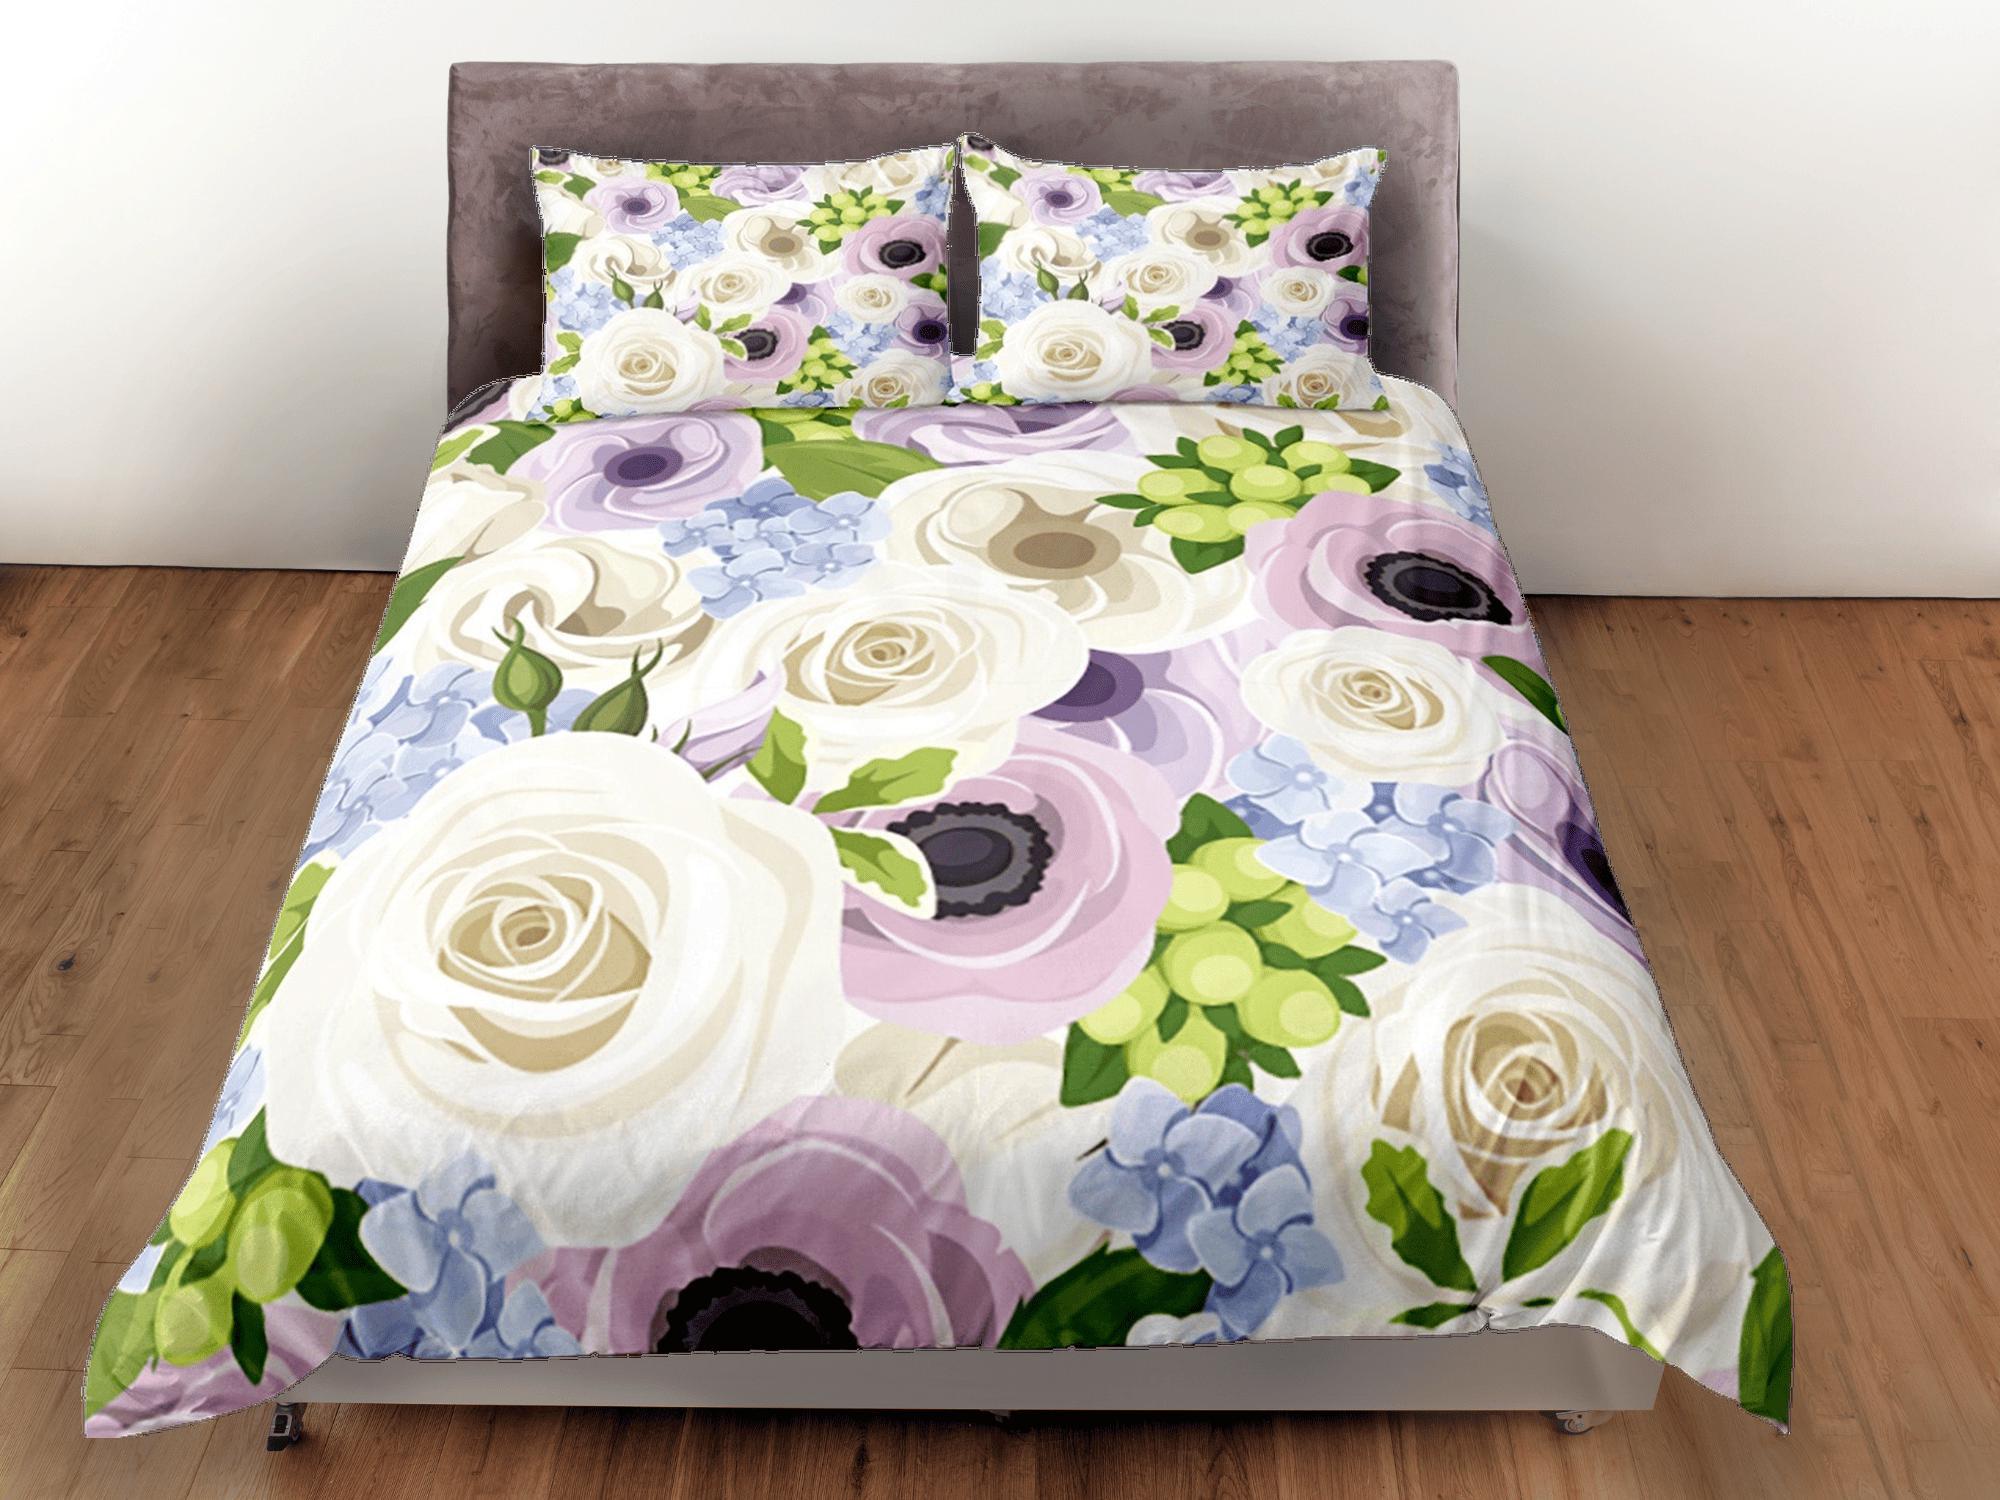 daintyduvet Roses Duvet Cover Set Colorful Girly Bedspread, Floral Dorm Bedding Pillowcase